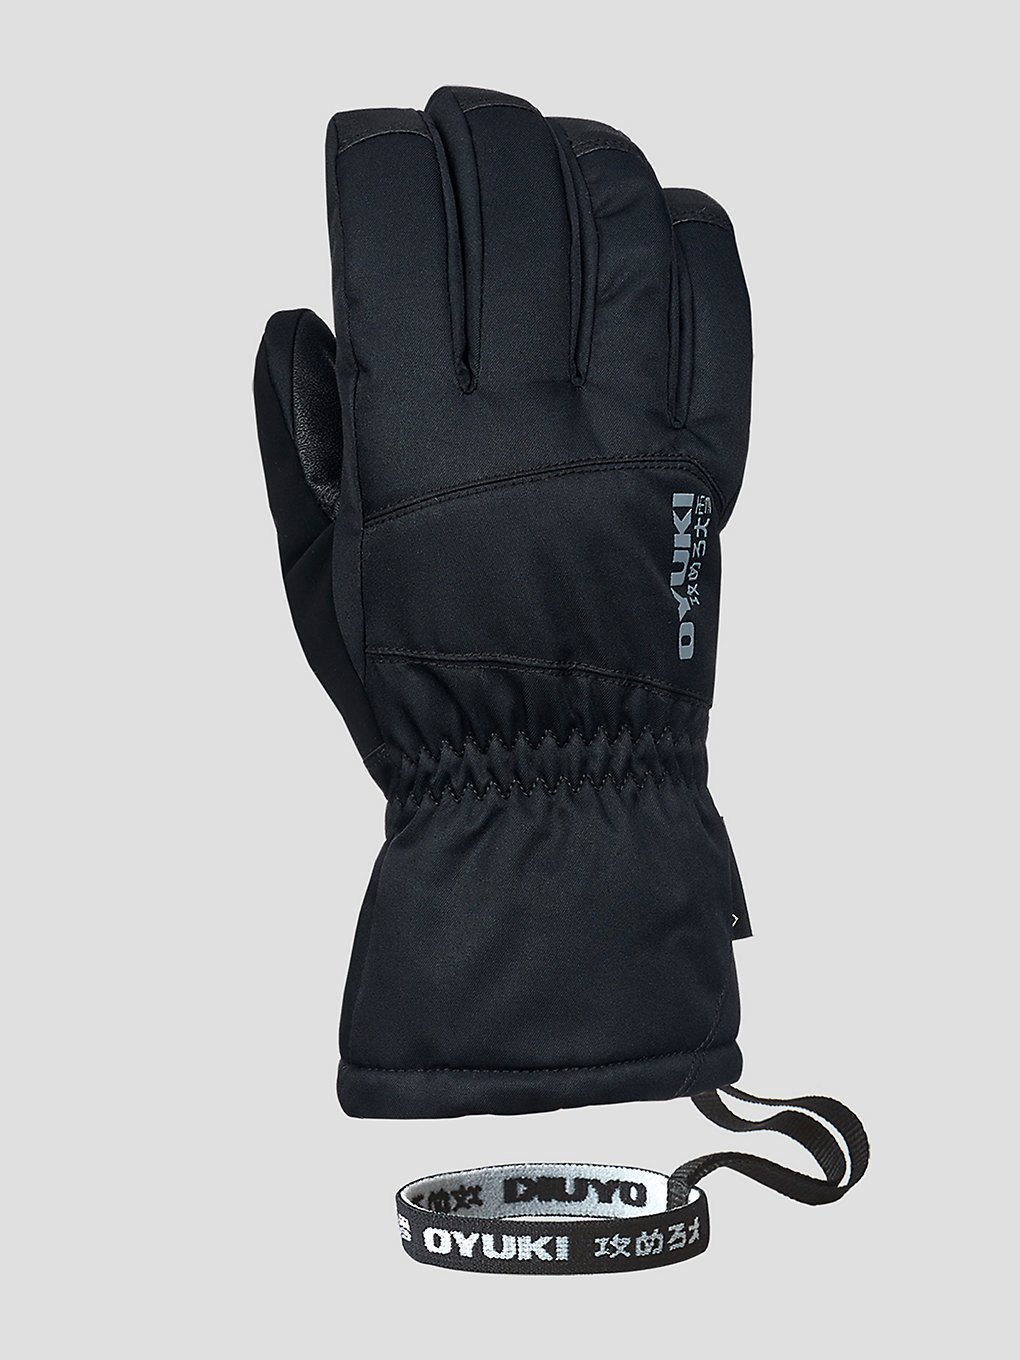 Oyuki Sugi Gtx Handschuhe black kaufen